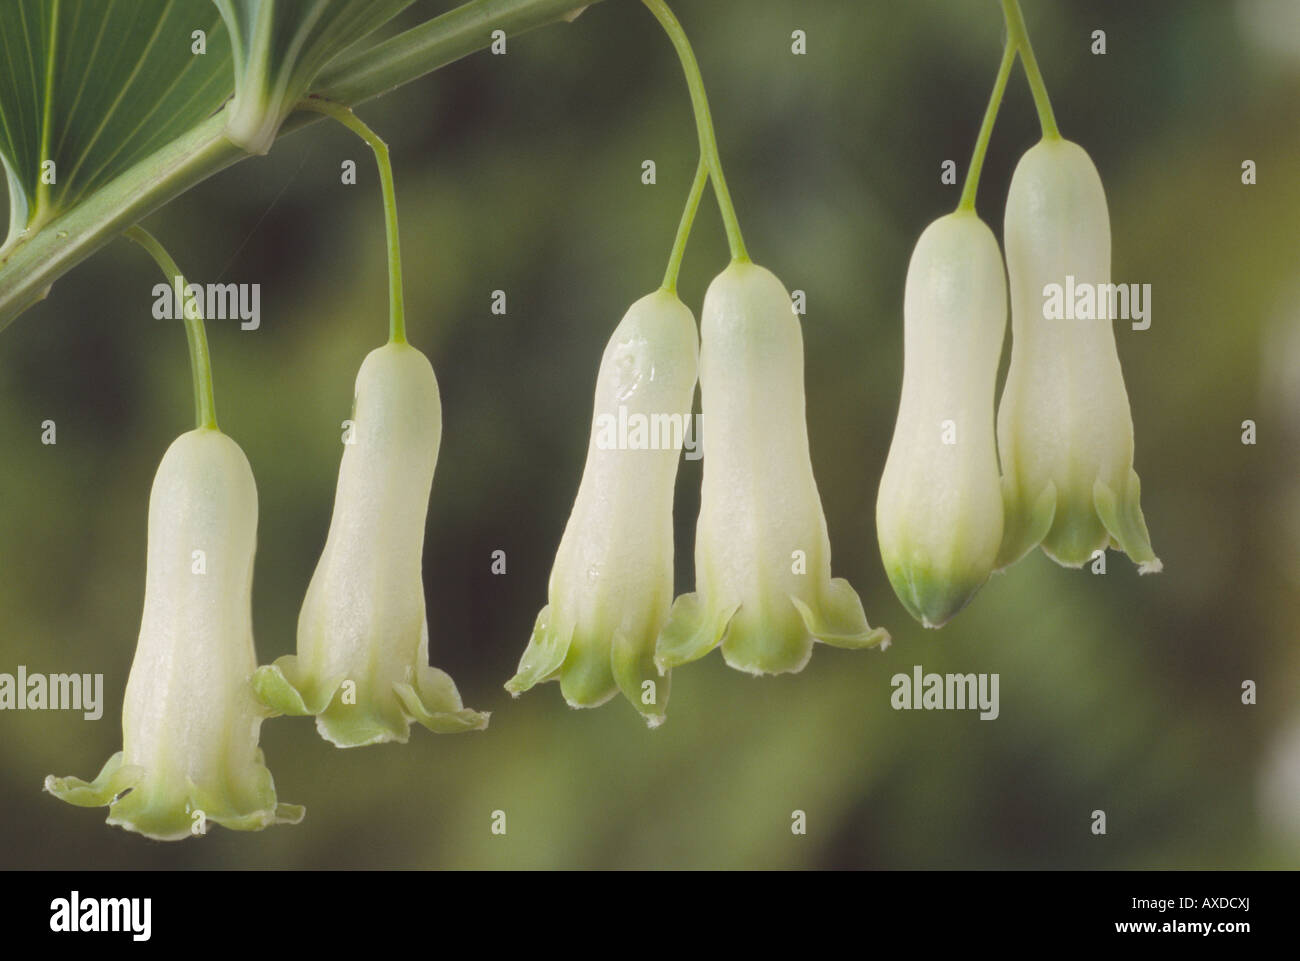 Polygonatum multiflorum (Solomon's seal) White and green pendent flowers on stem. Stock Photo